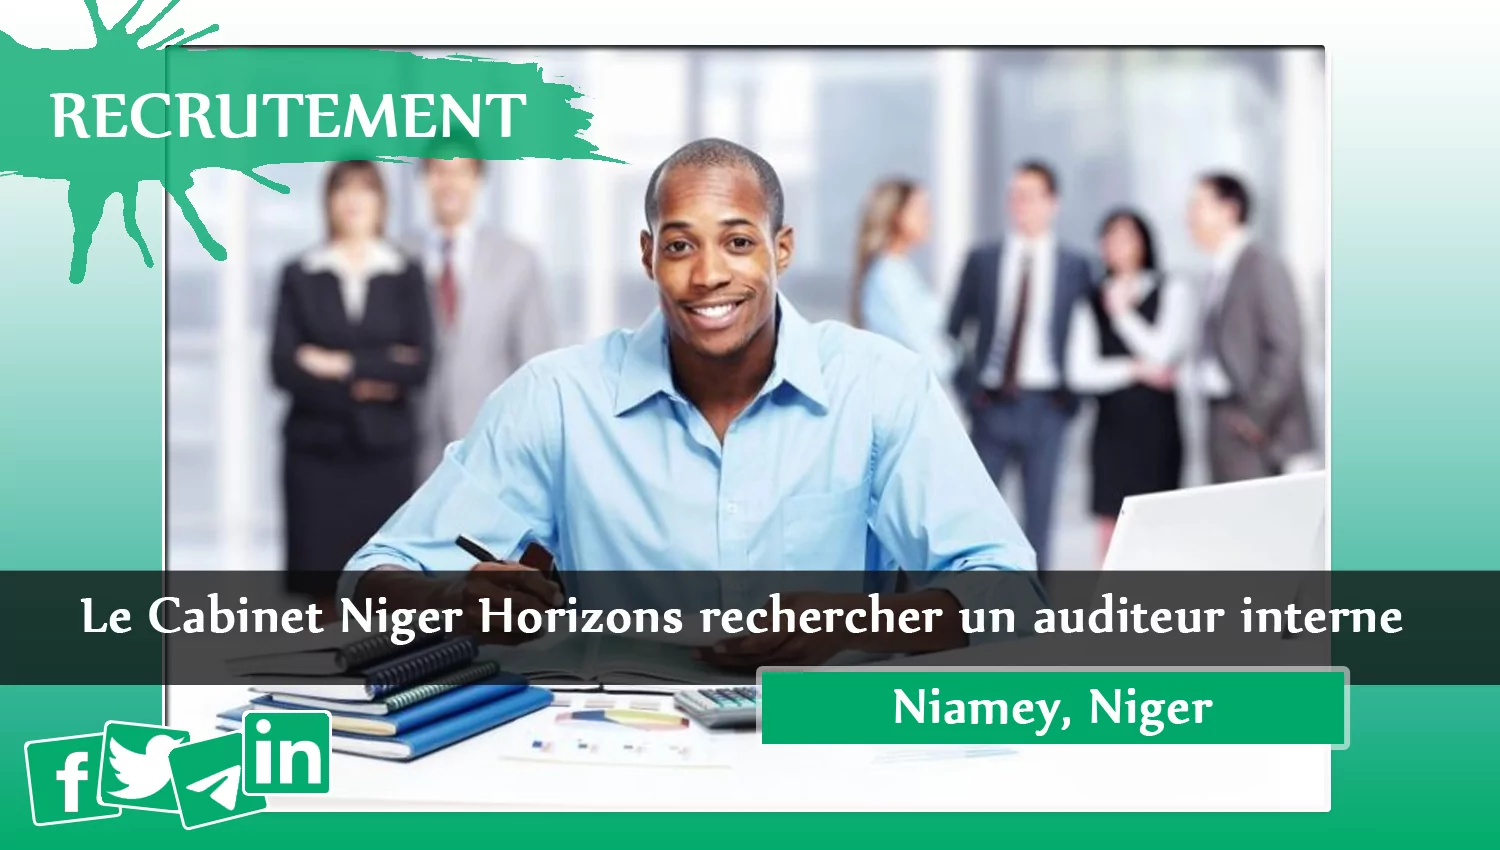 Le Cabinet Niger Horizons rechercher un auditeur interne, Niamey, Niger